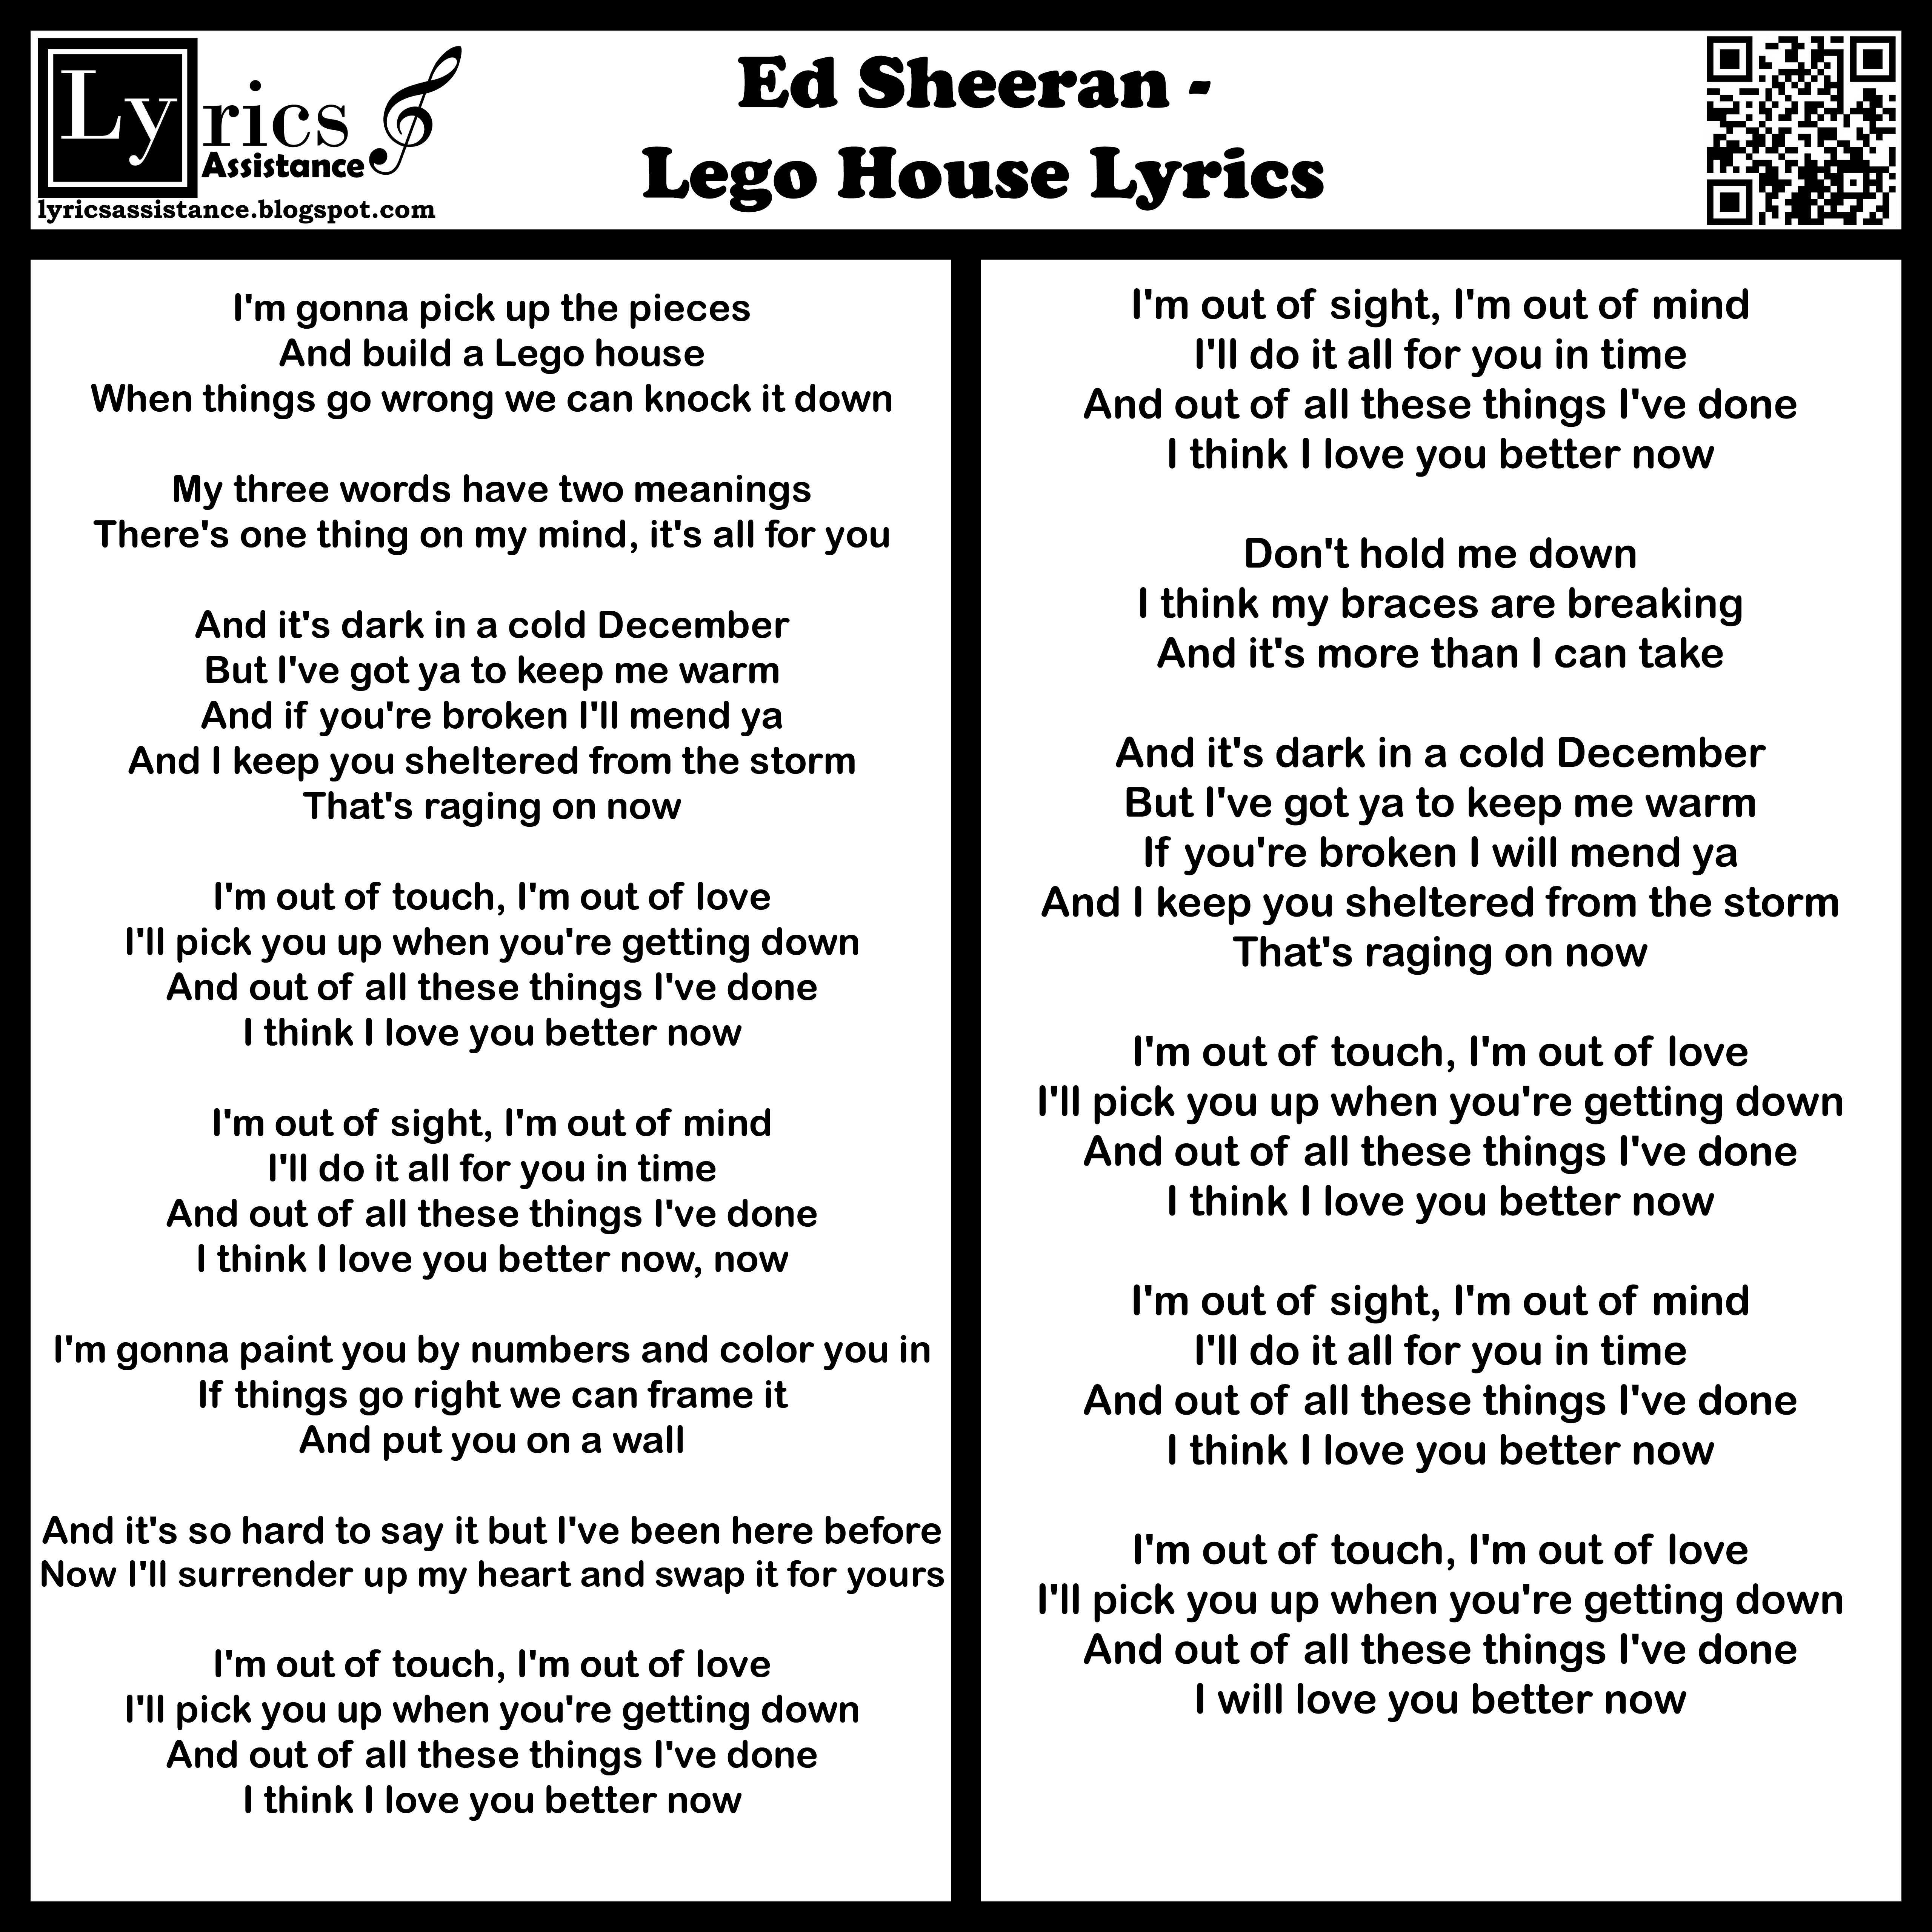 ed sheeran - lego house lyrics